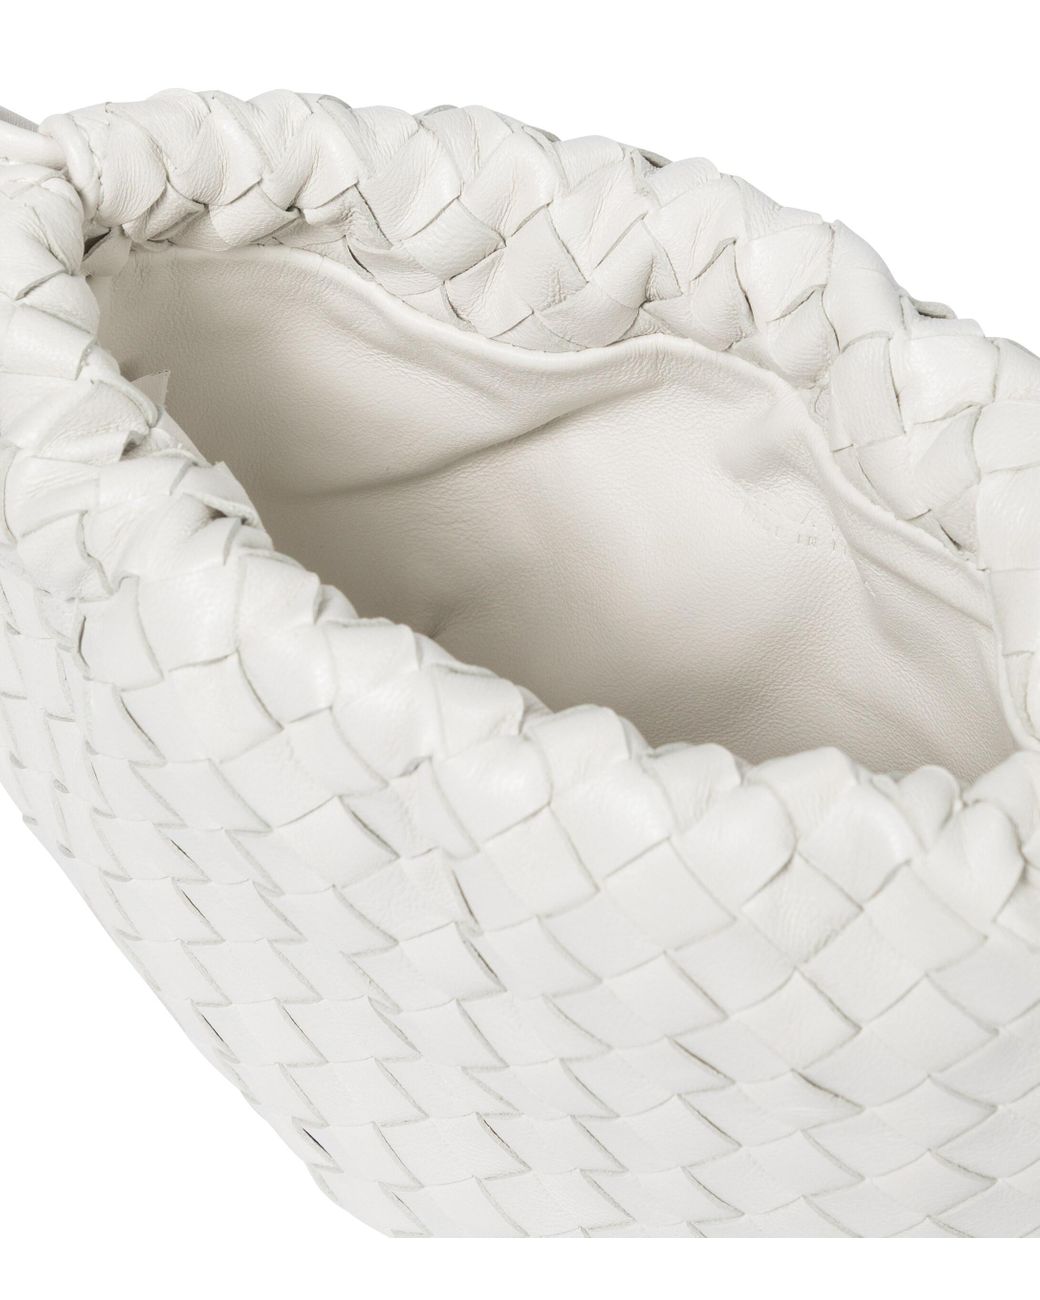 Bottega Veneta Bulb Mini Leather Shoulder Bag in White